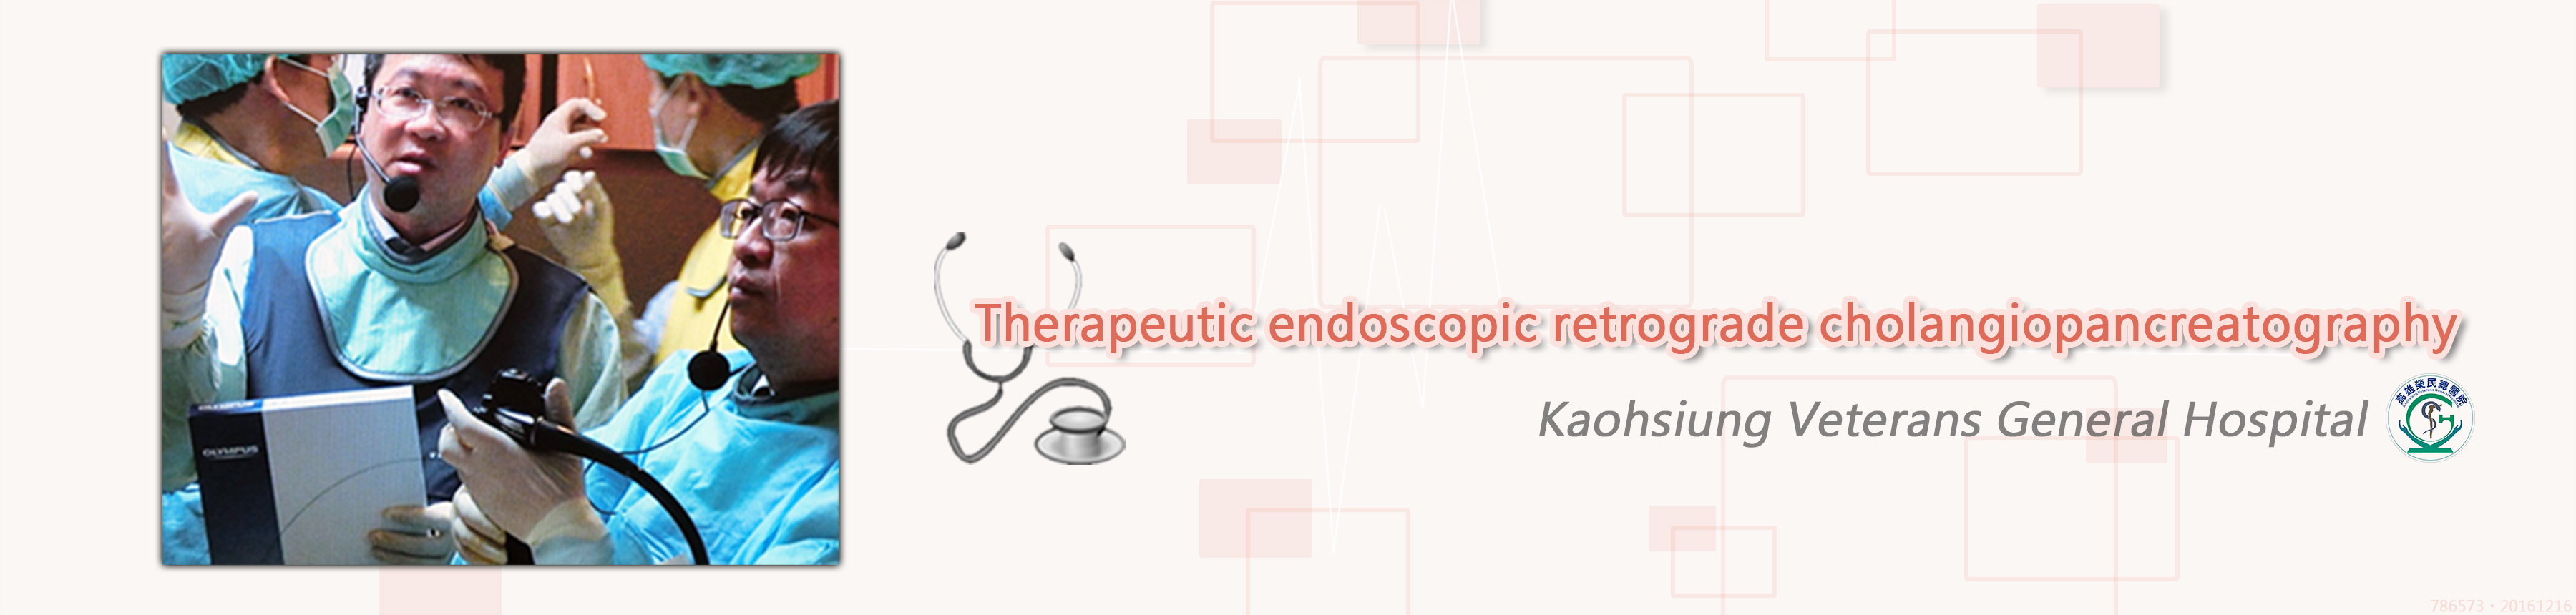 Therapeutic endoscopic retrograde cholangiopancreatography(Image)